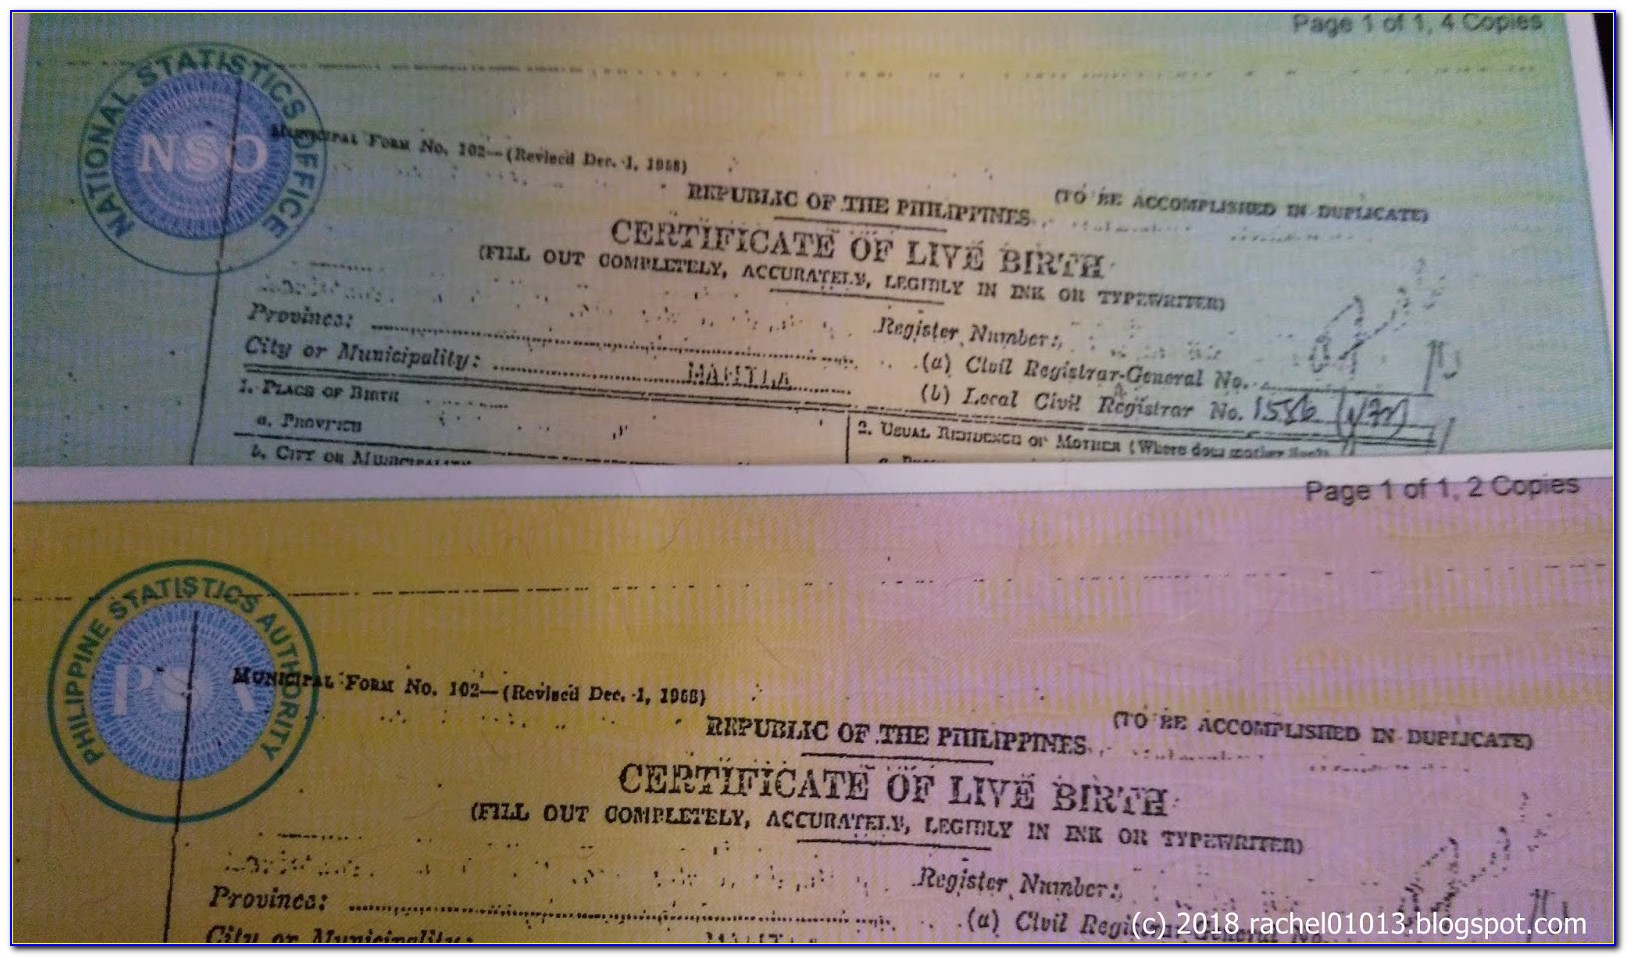 Philippine Statistics Authority Birth Certificate Number